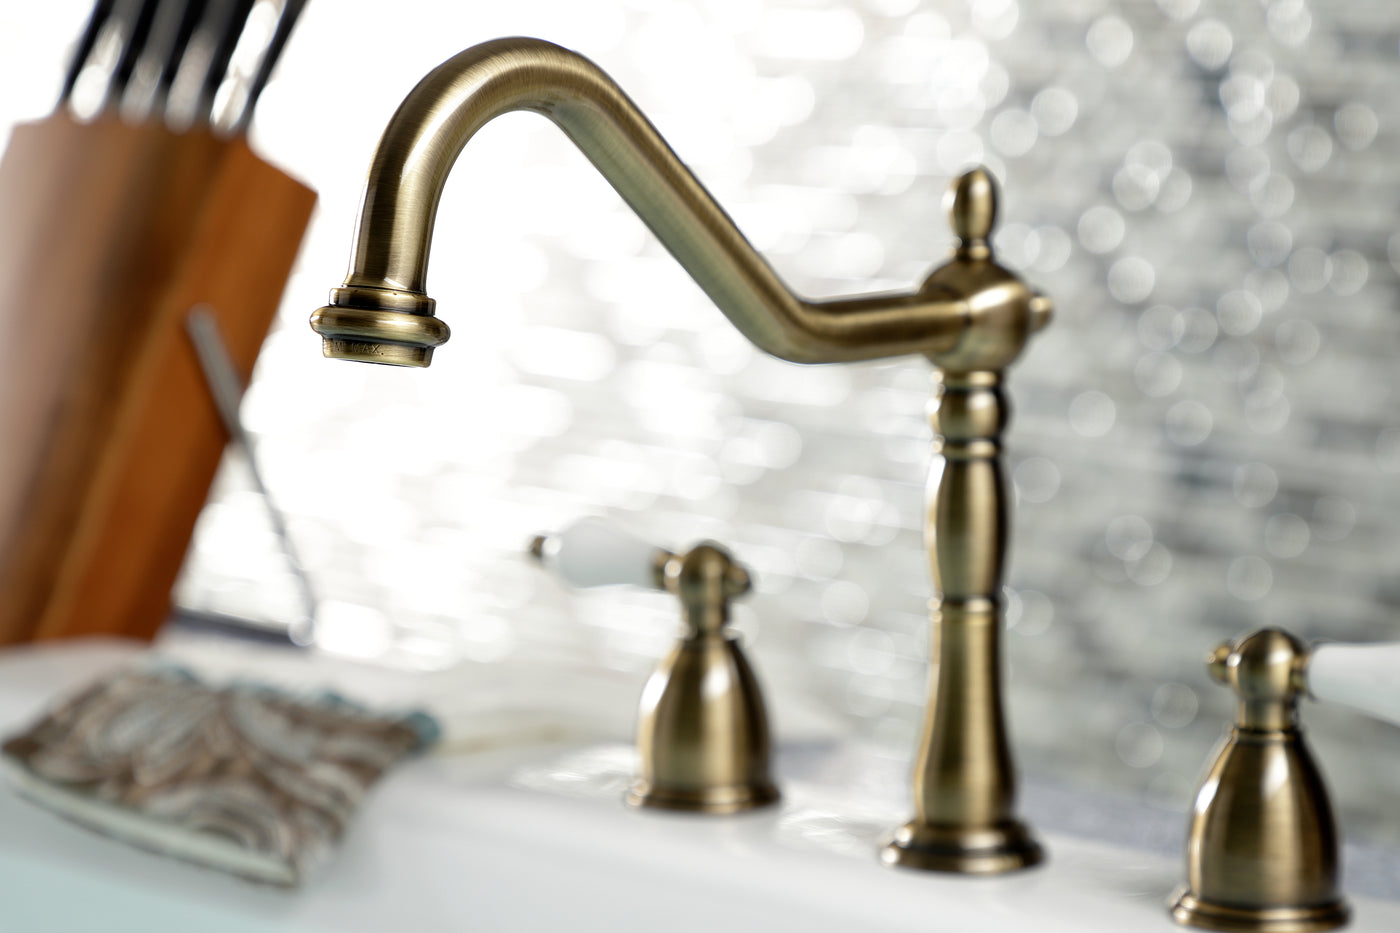 Elements of Design EB1793PLLS Widespread Kitchen Faucet, Antique Brass